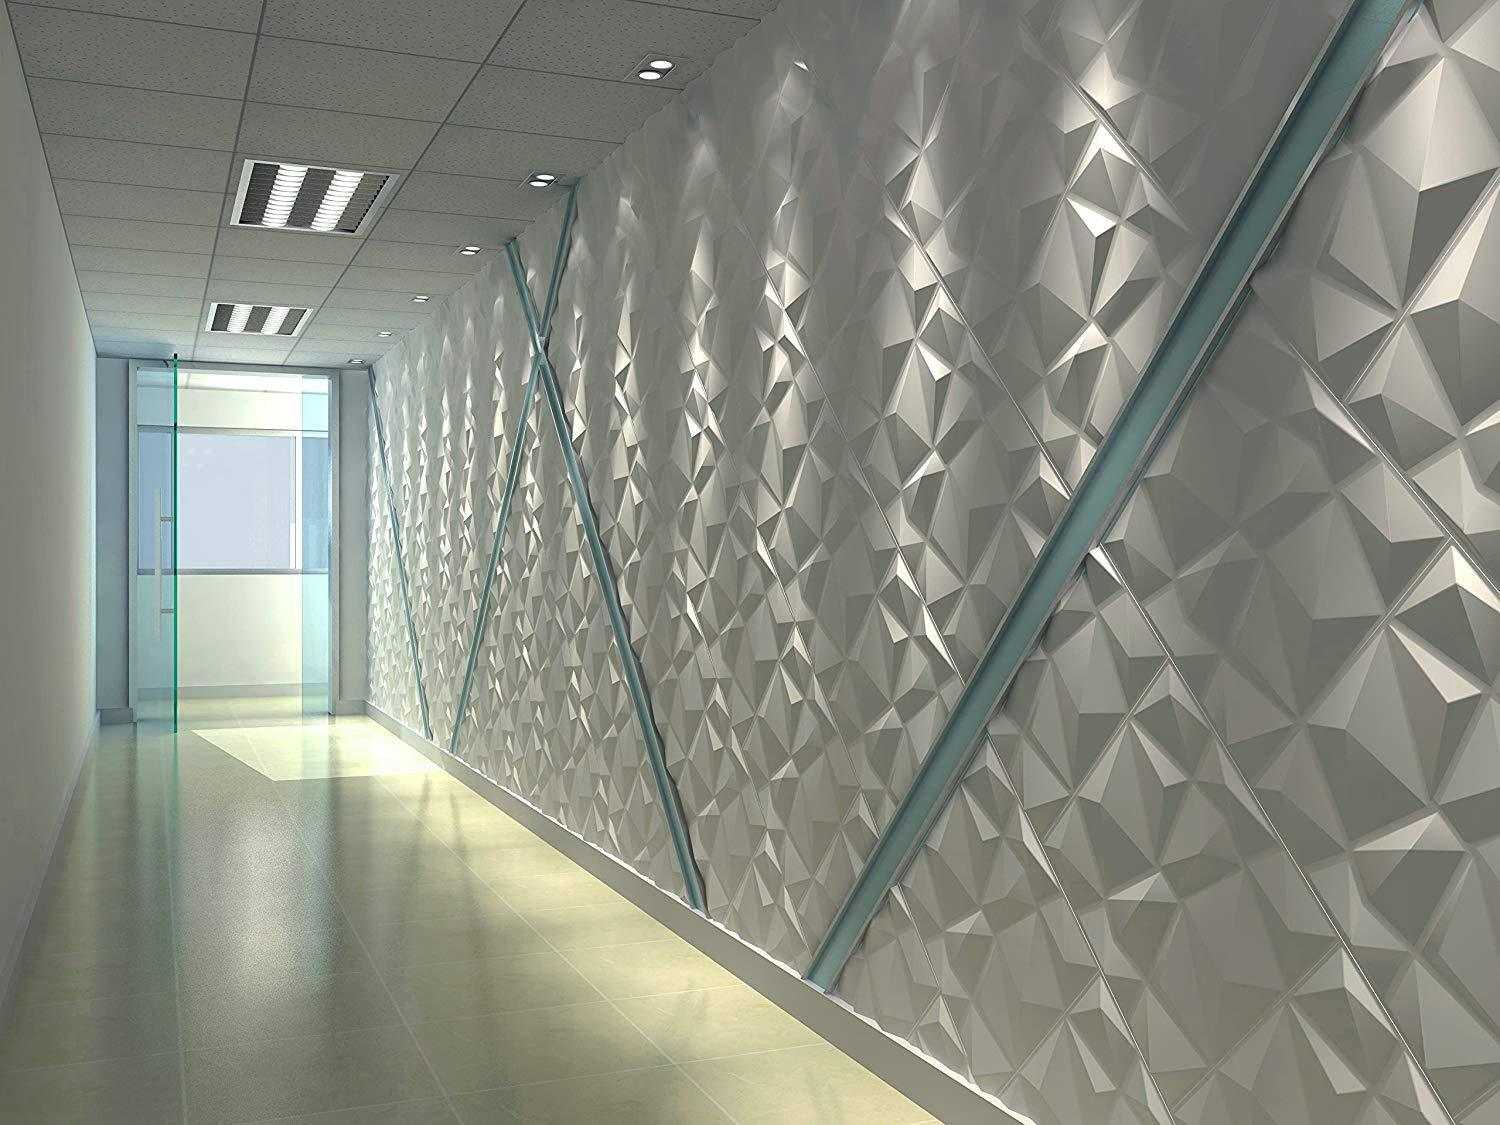 DIAMOND 3D Wall Panel per square meter